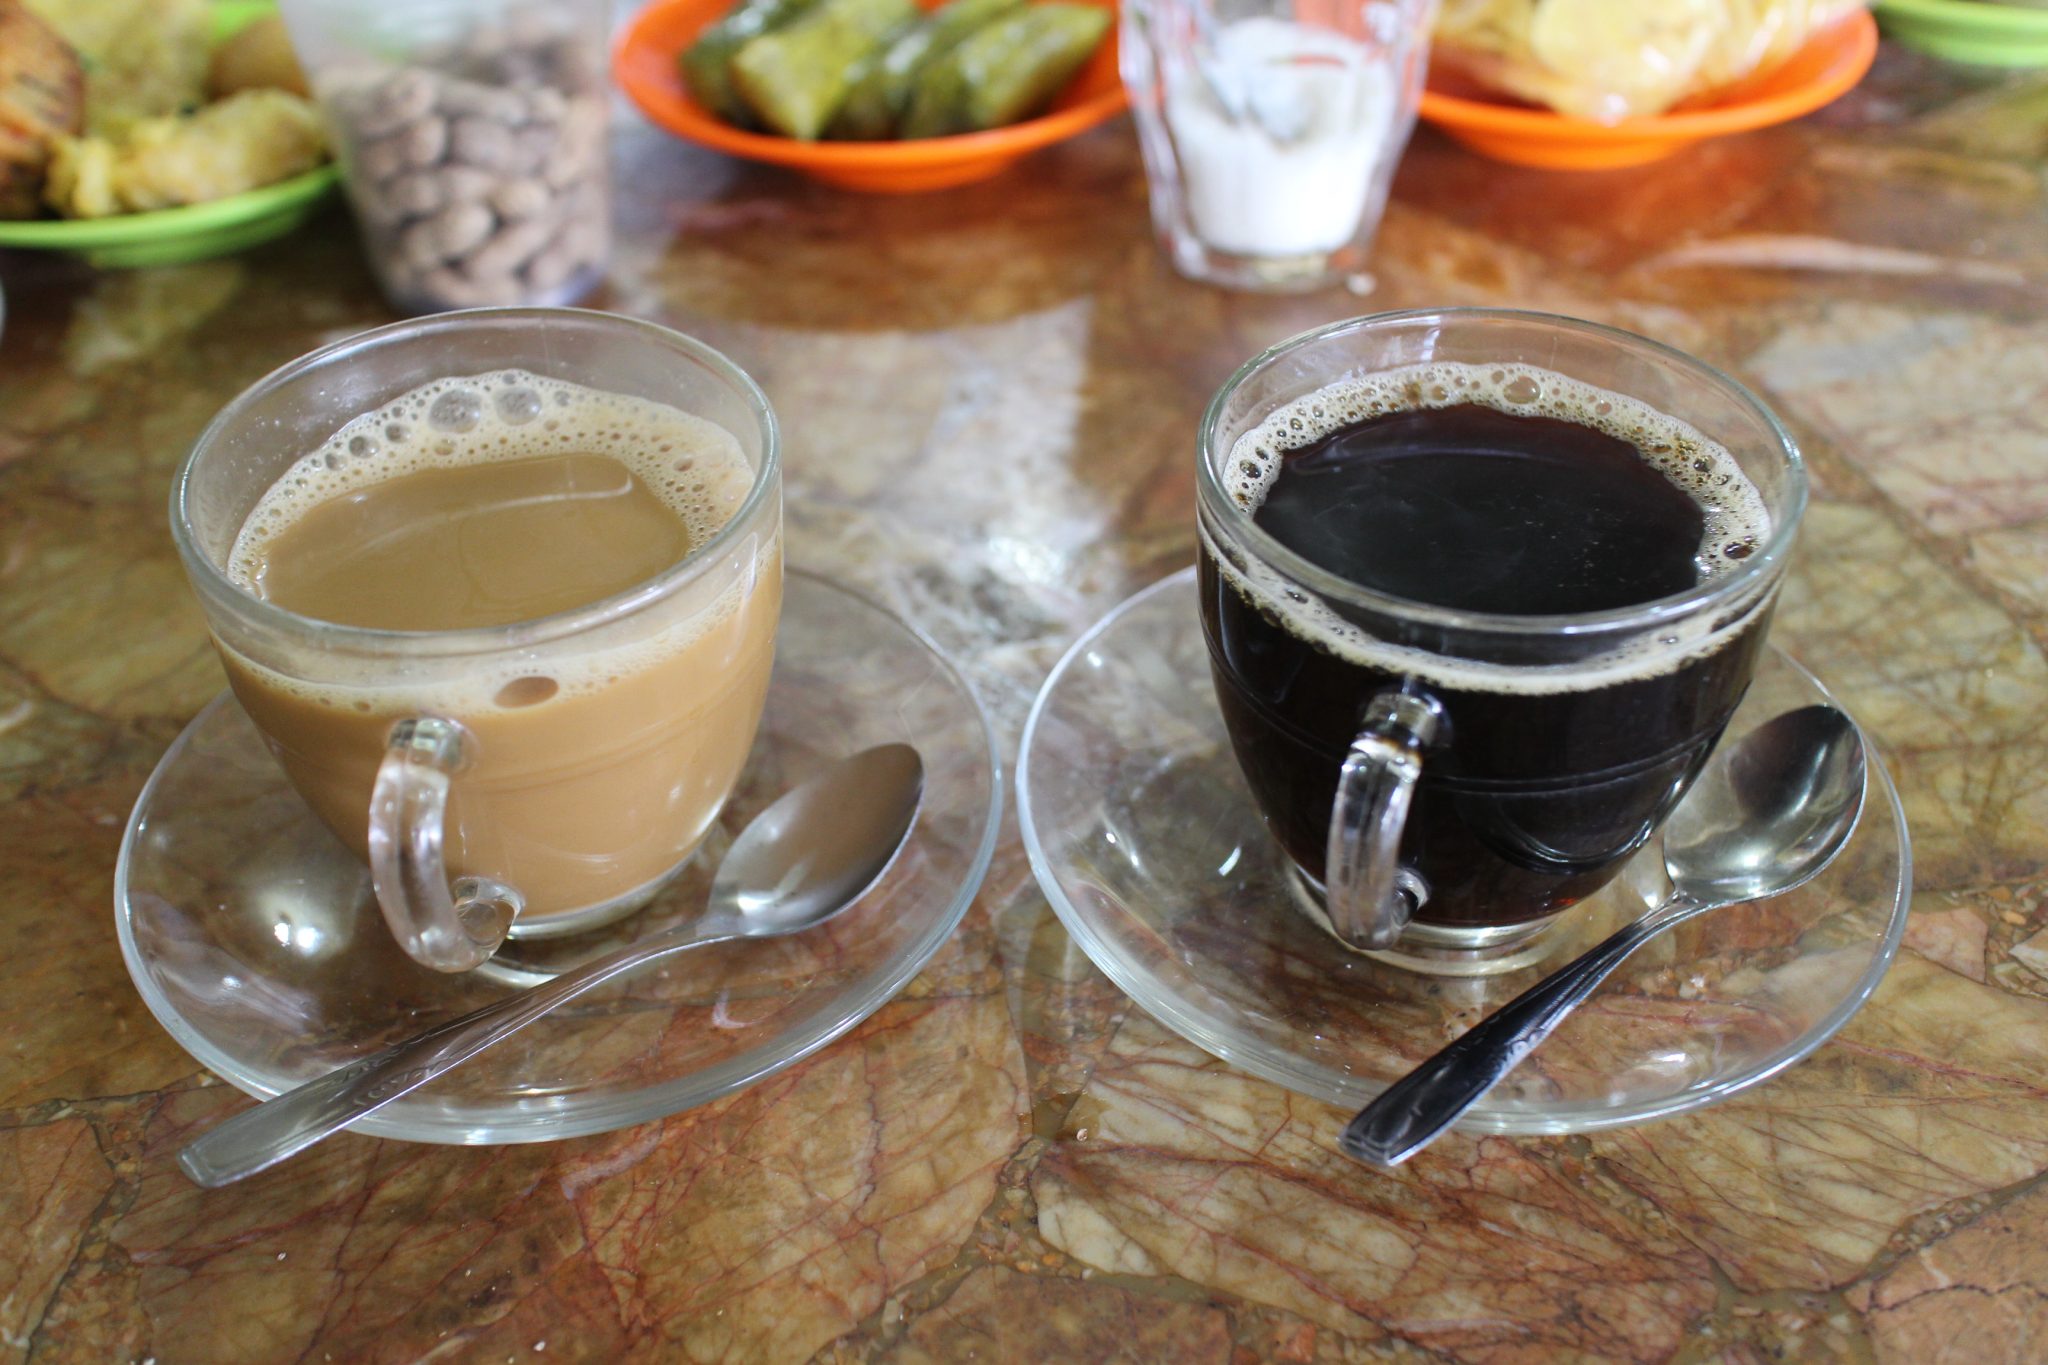 Warung Kopi Dan Mracang Widagdo - Coffee Shop Recommend!